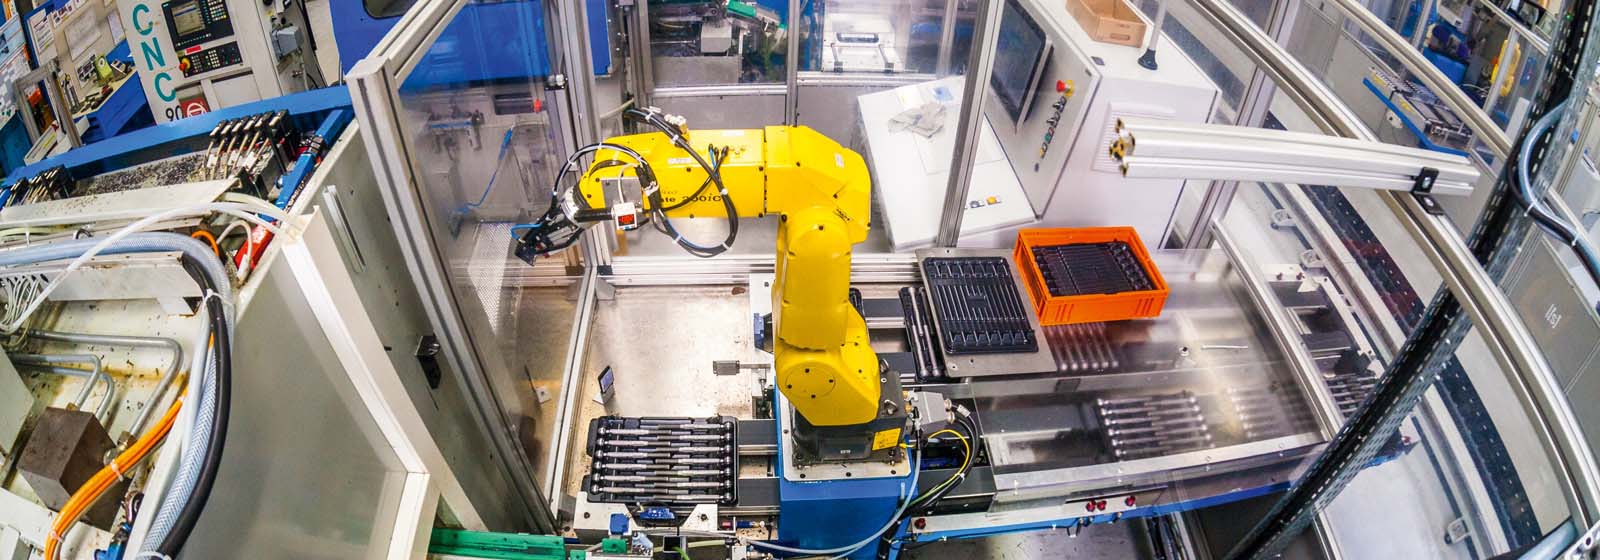 Robot-on-rail handling materials